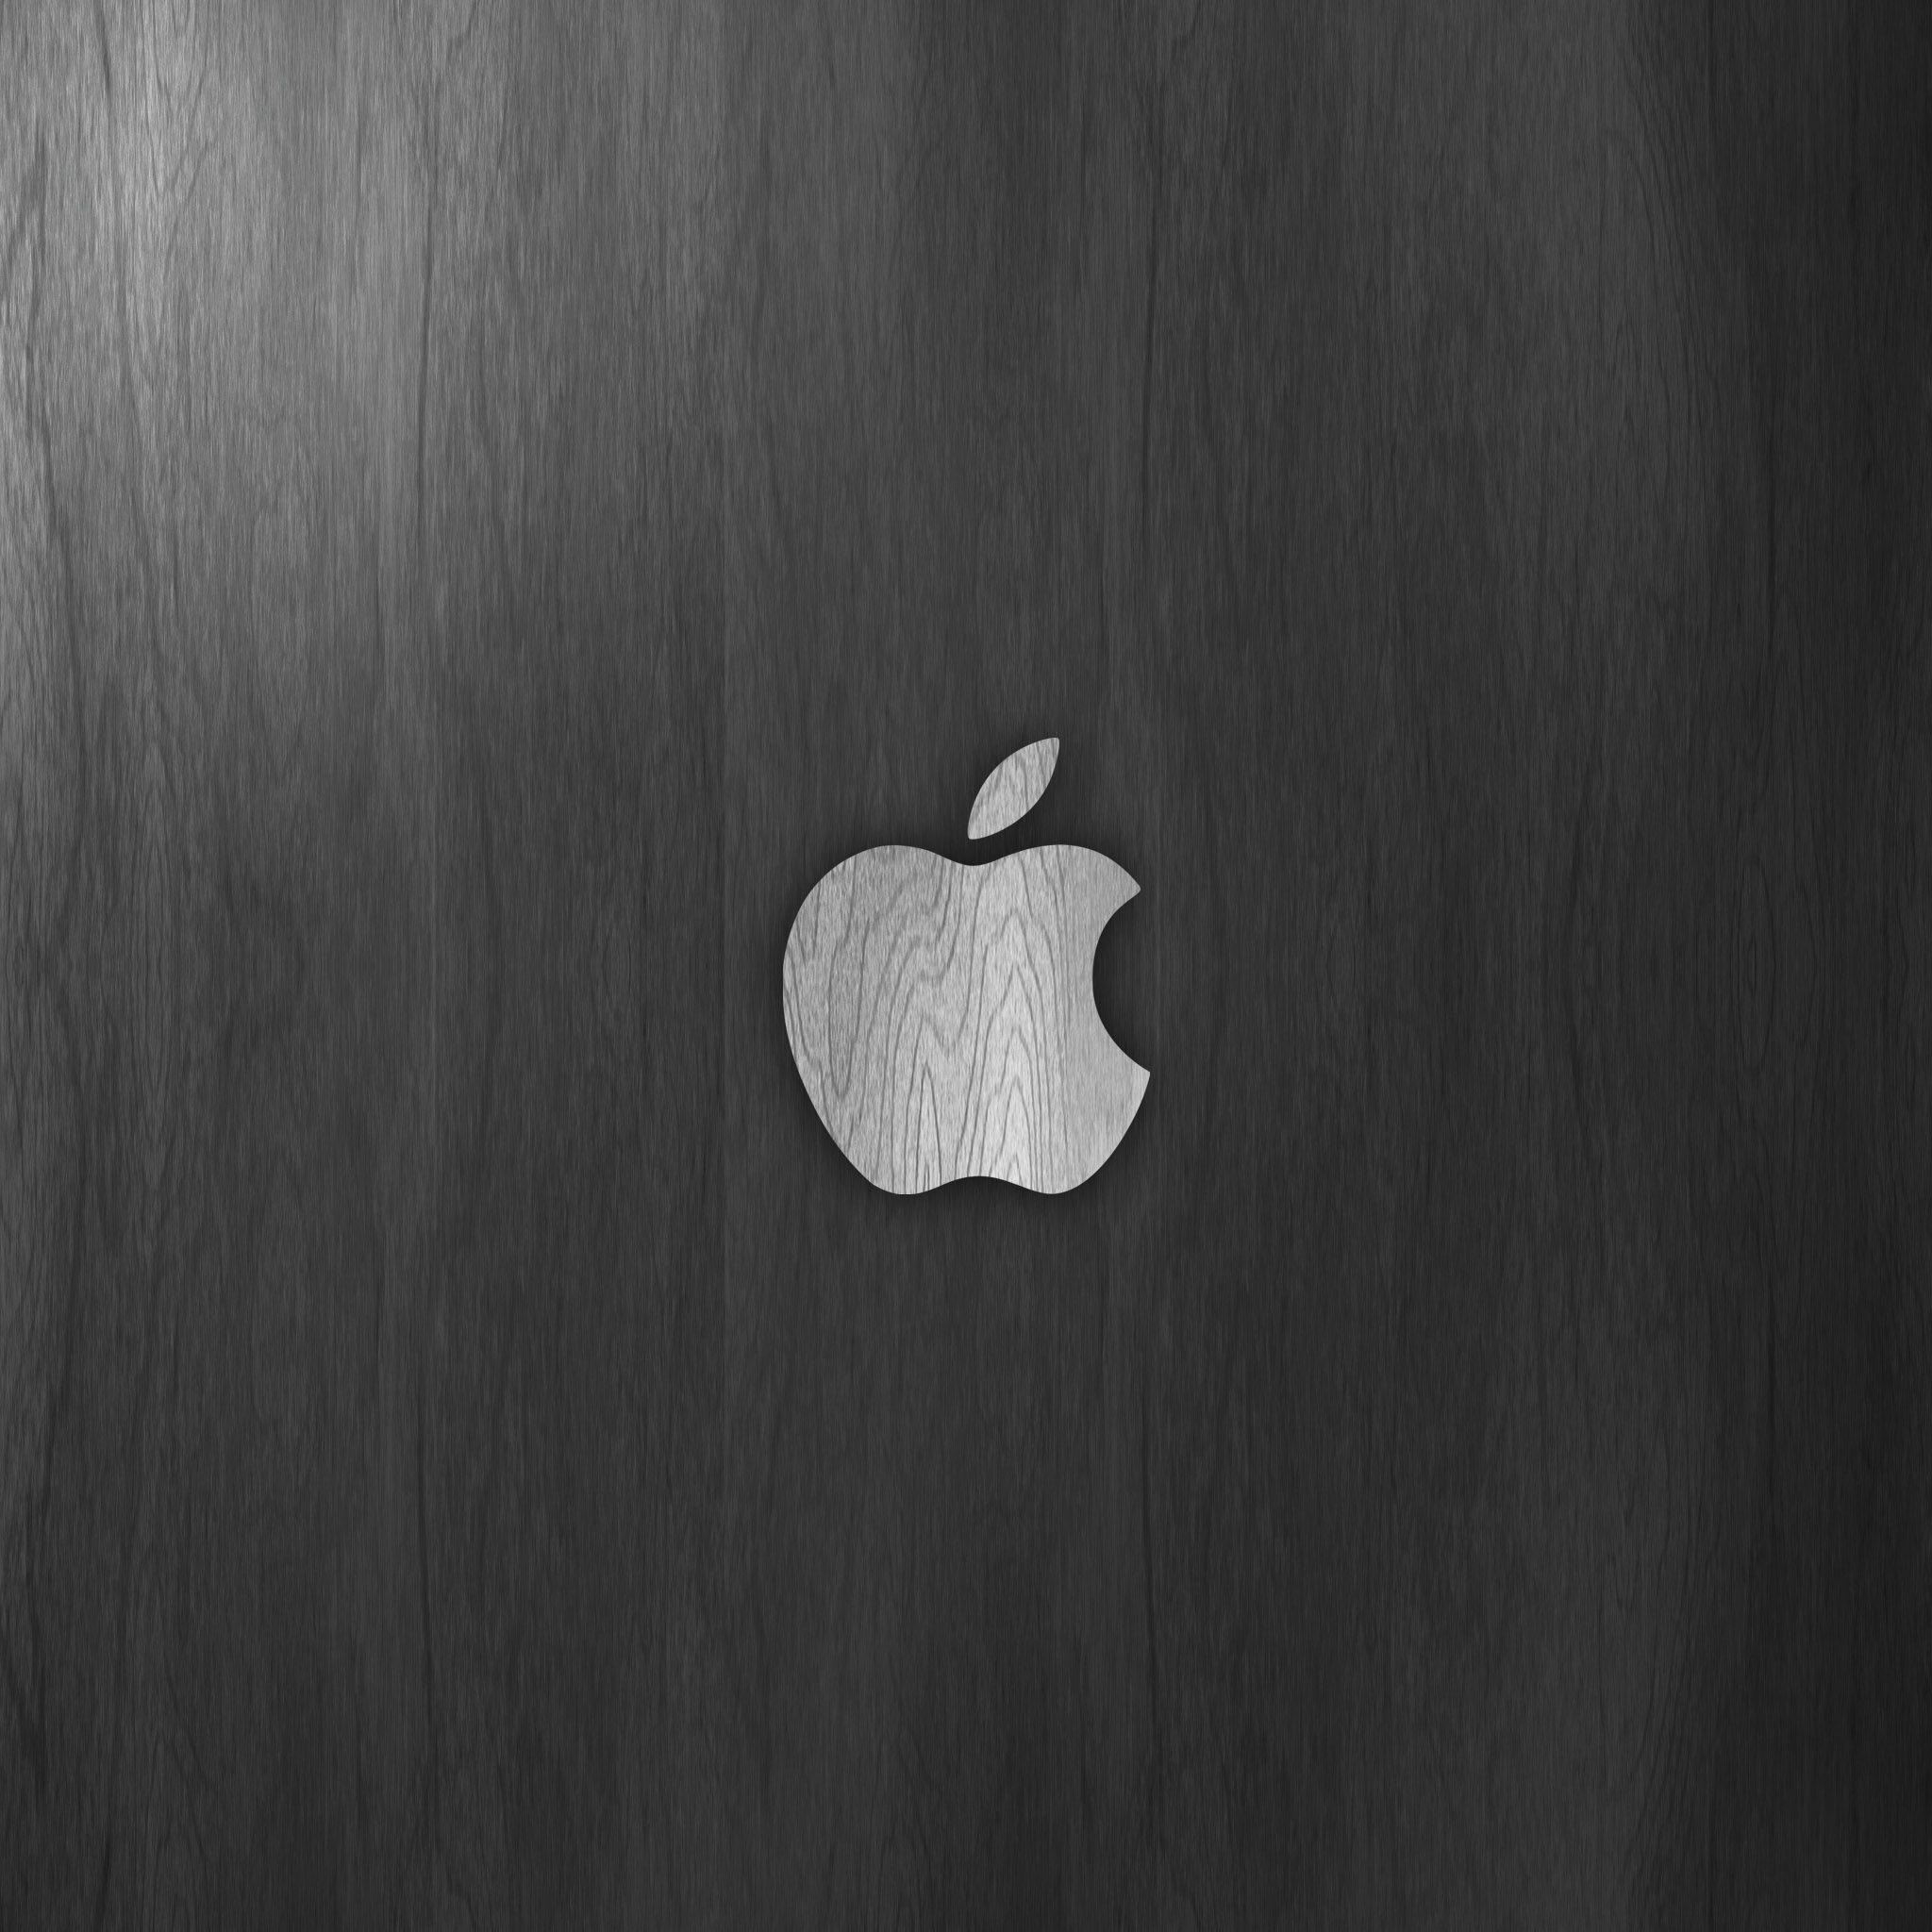 Найти картинку айфона. Яблоко айфон. Обои Apple. Серый фон на айфон. Эппл черный.